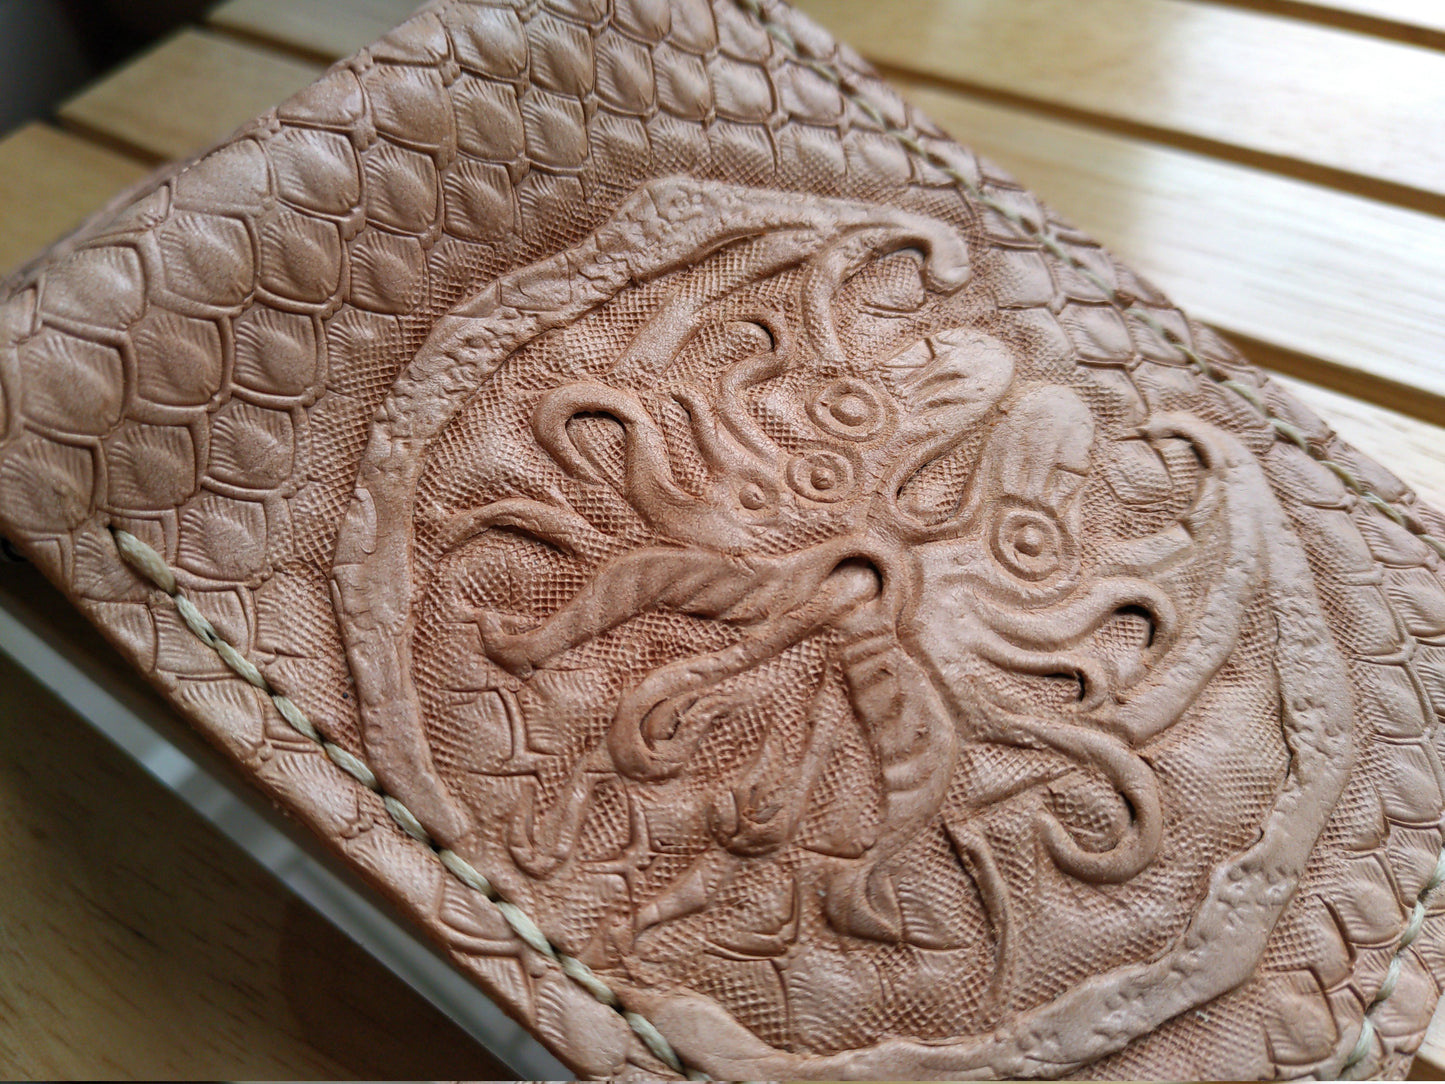 Cthulhu emblem - tan version - no paint - Leather wallet.